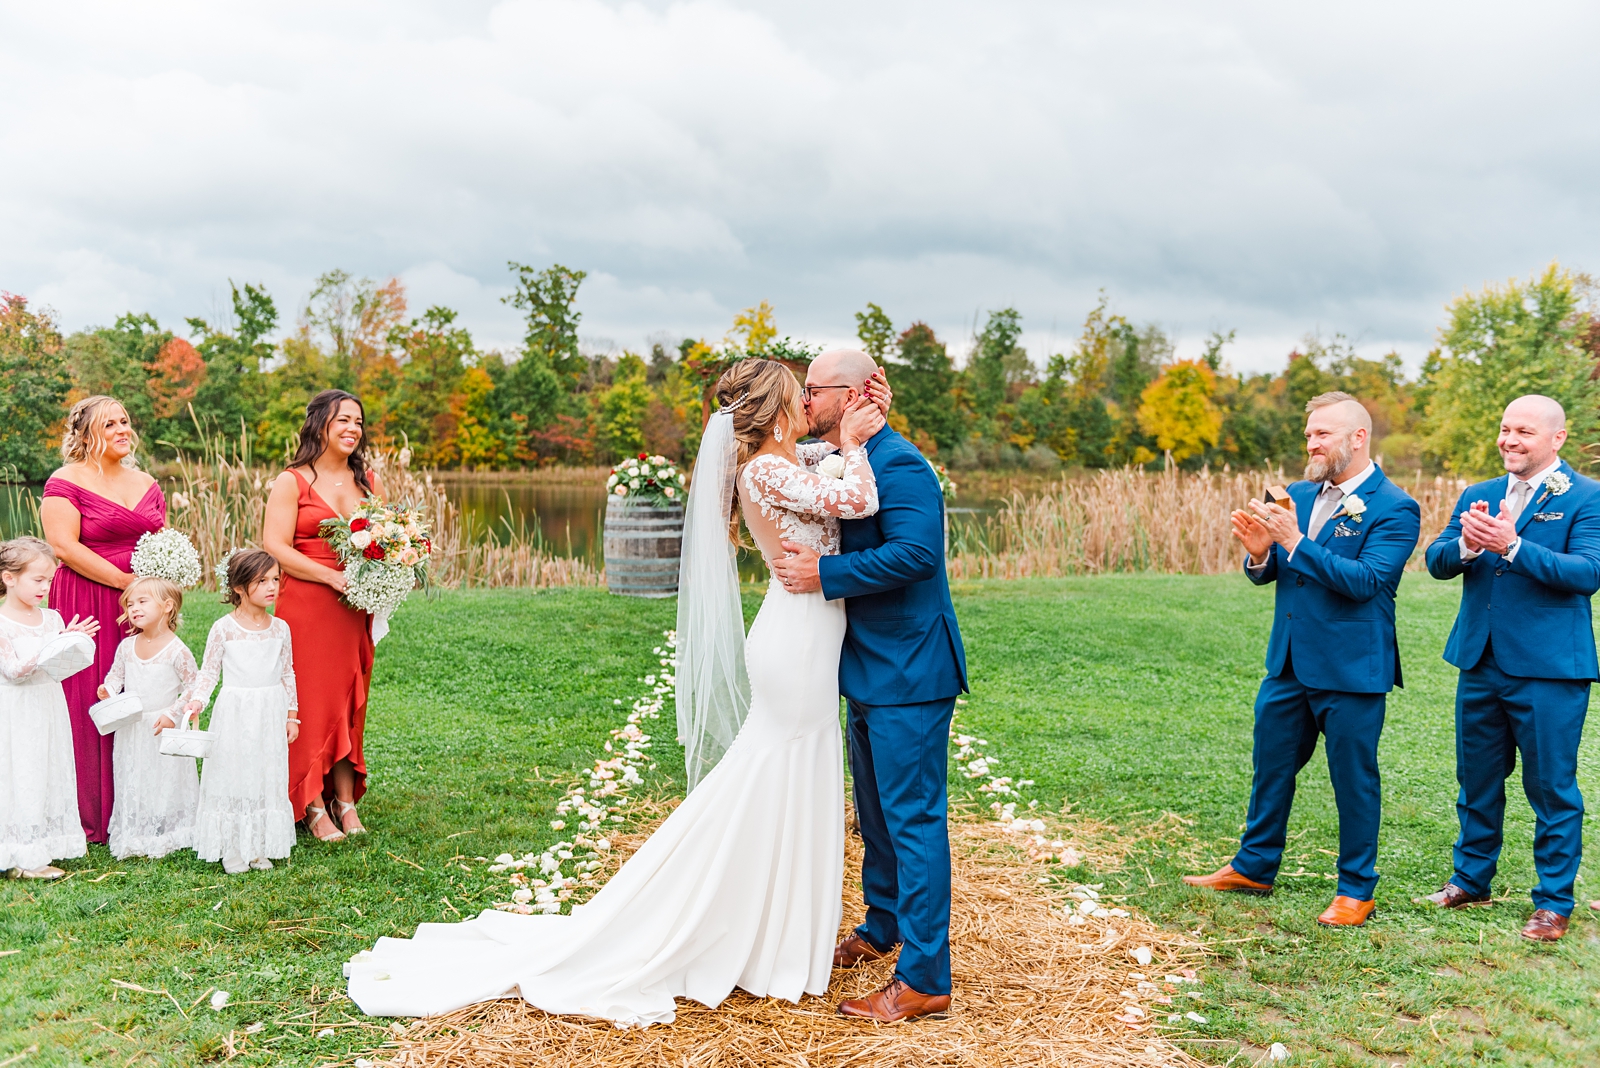 Wedding ceremony at vineyard in Pennsylvania